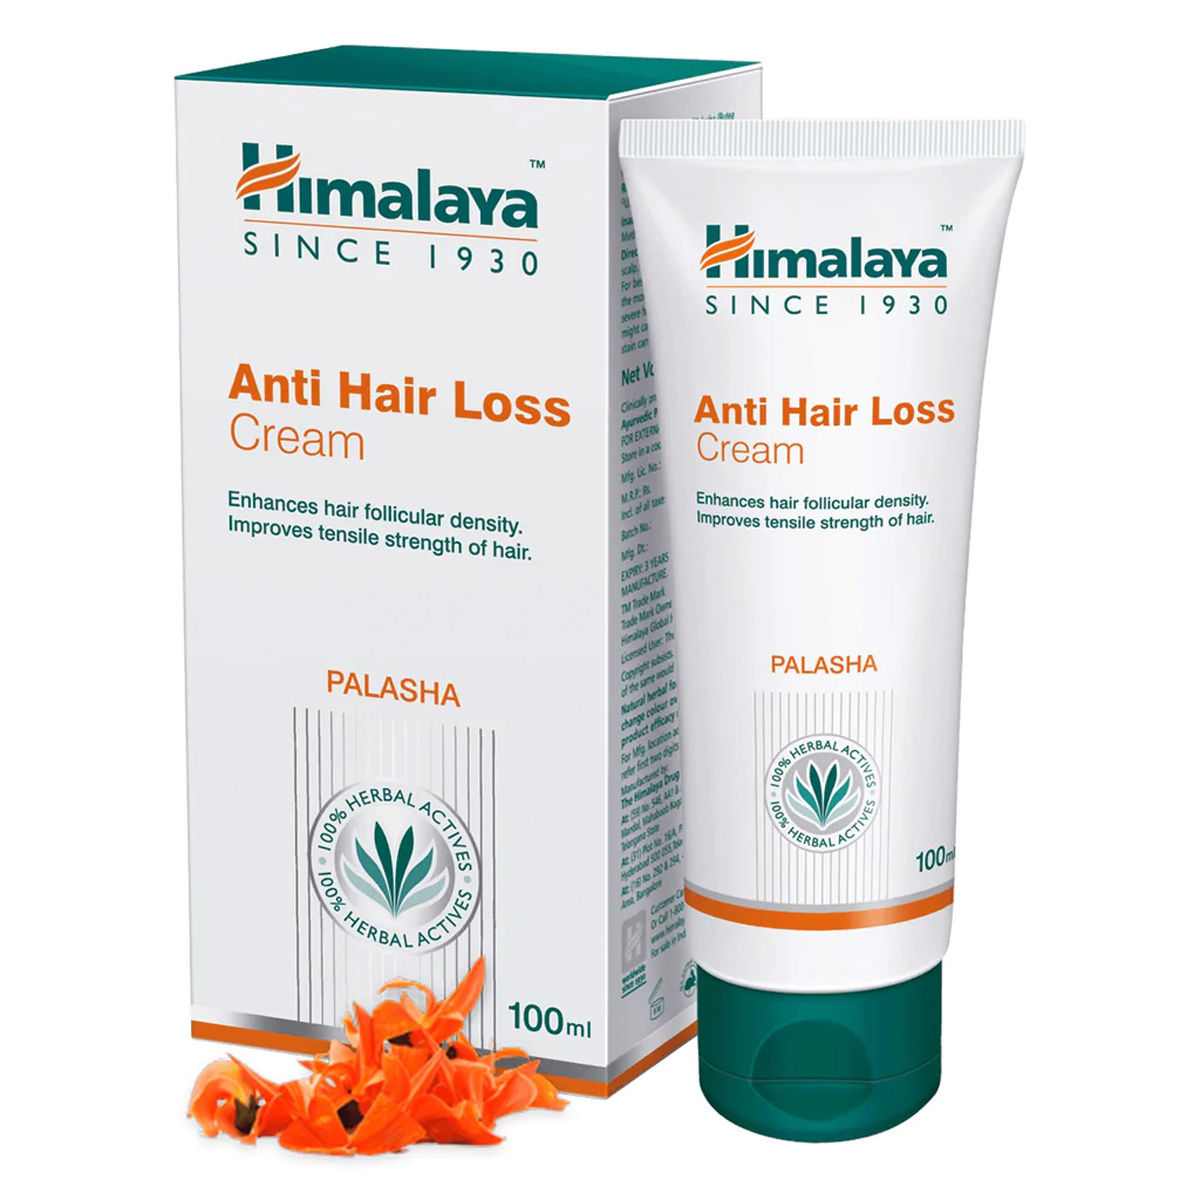 Himalaya Protein Hair Cream Review  BLOGGERSHE